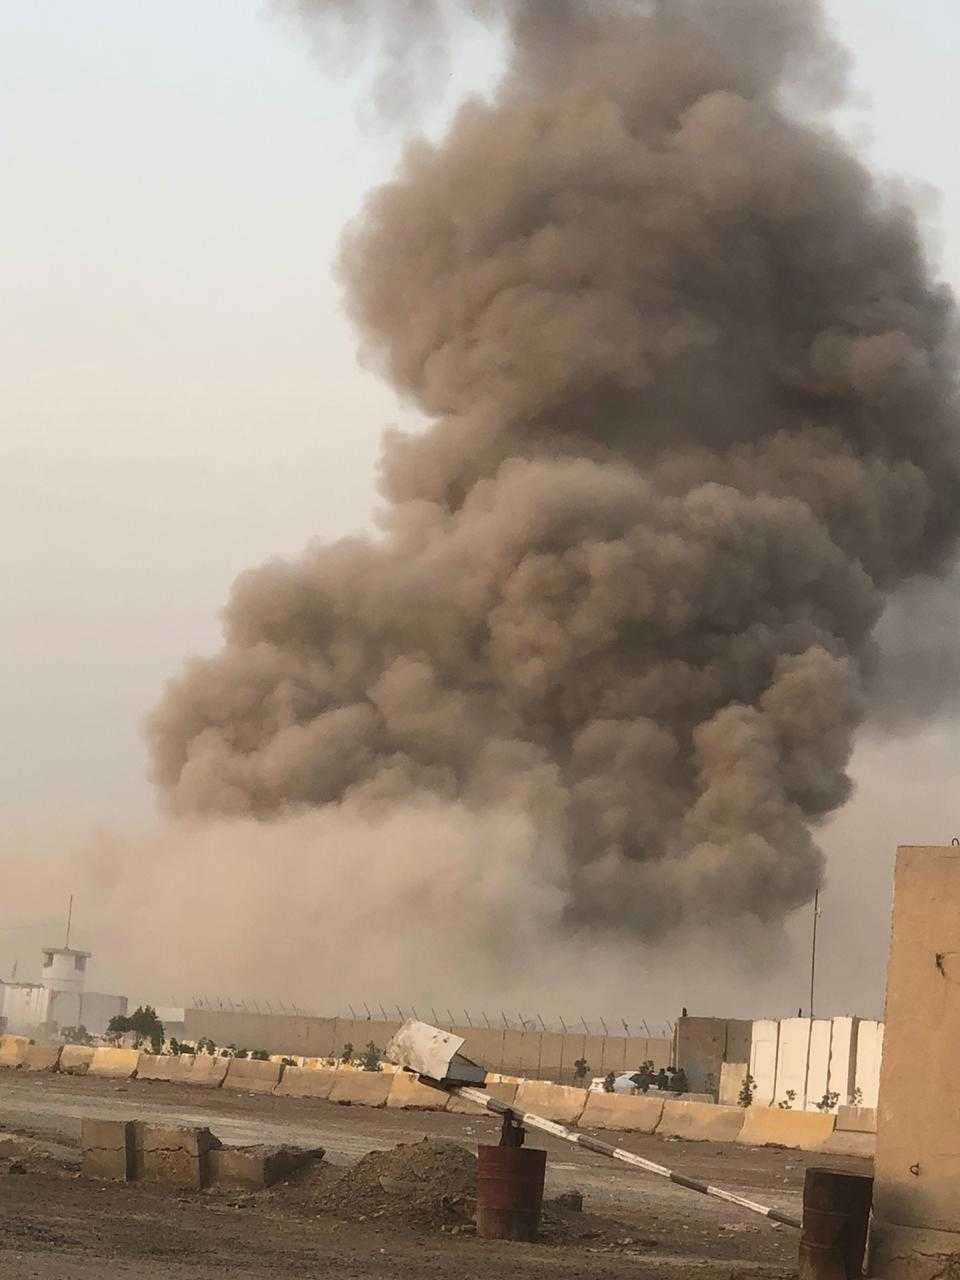 Baghdad heavy smoke fire, iraq news, middle east news, arab world, world news, breaking news, latest news; The Eastern Herald News